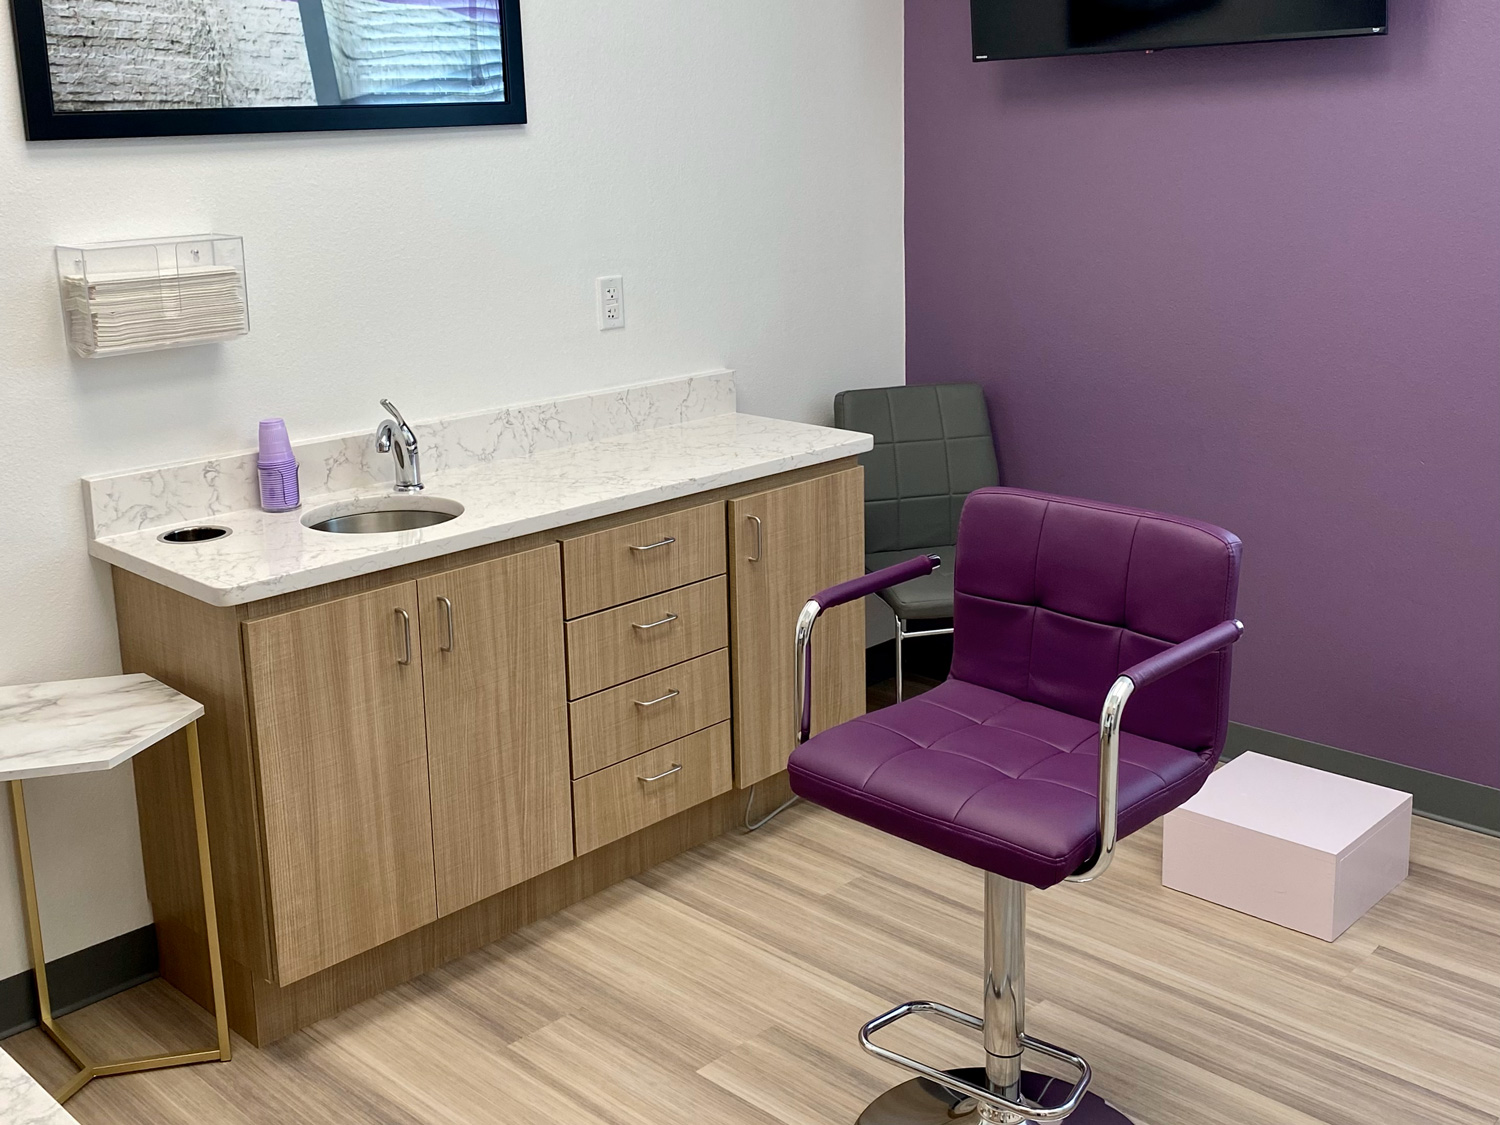 KL Dental studio sink and purper chair